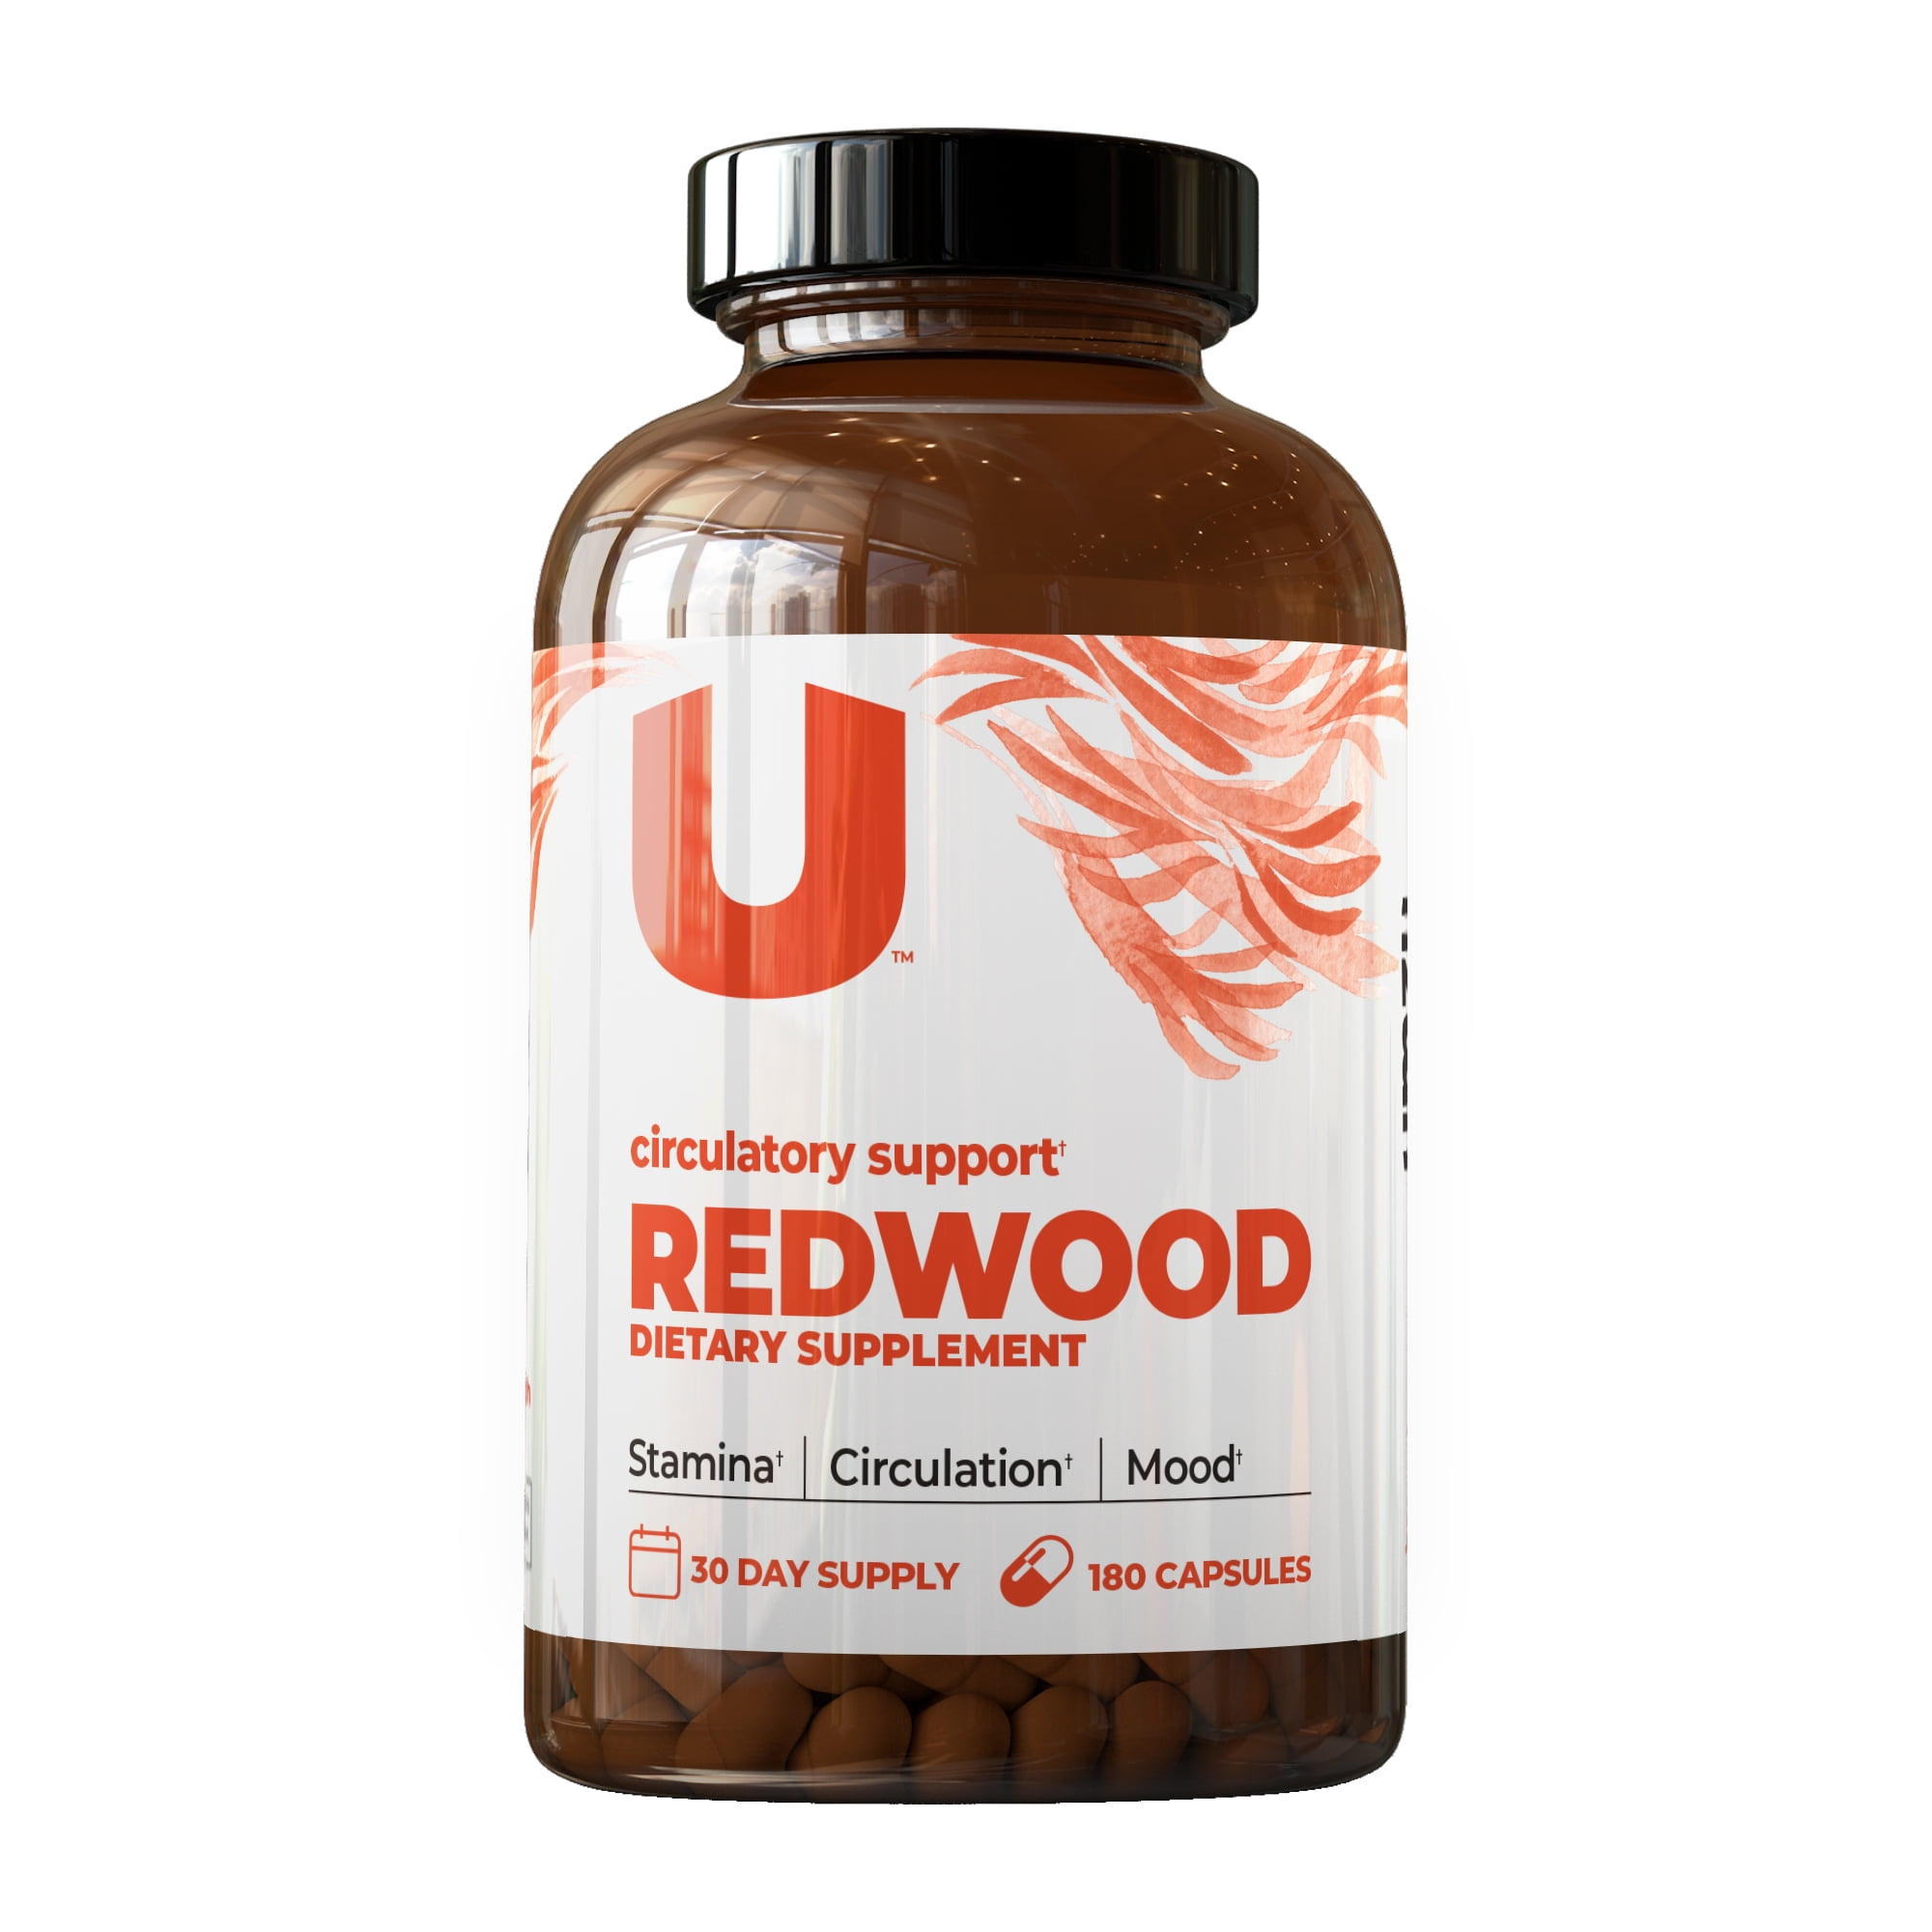 Testro-X alternative: UMZU Redwood Nitric Oxide Booster